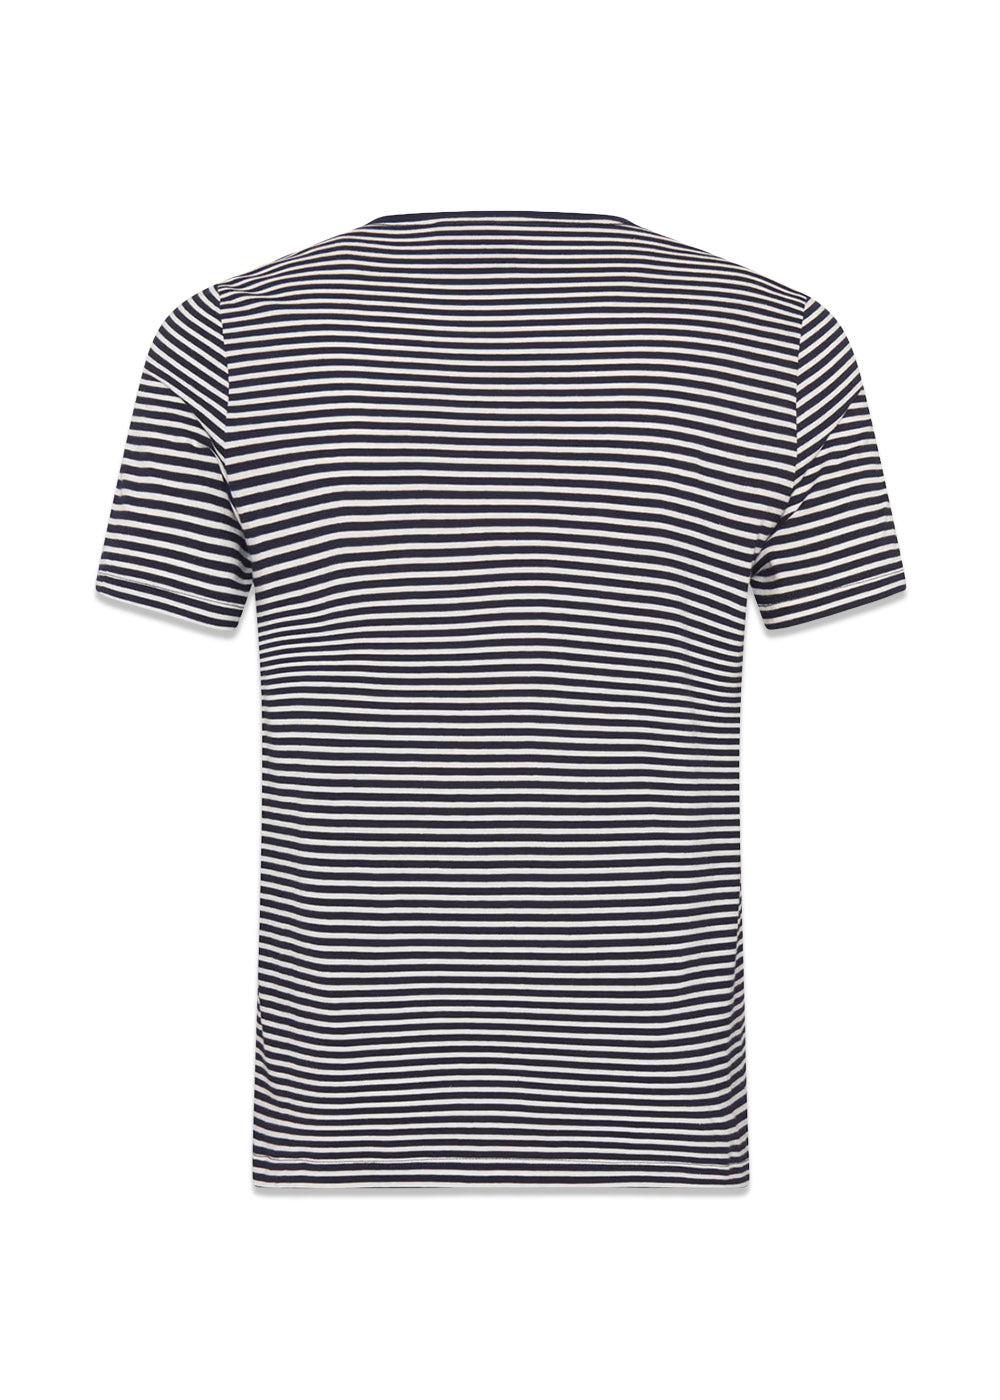 Kyran Striped T-shirt - Navy White